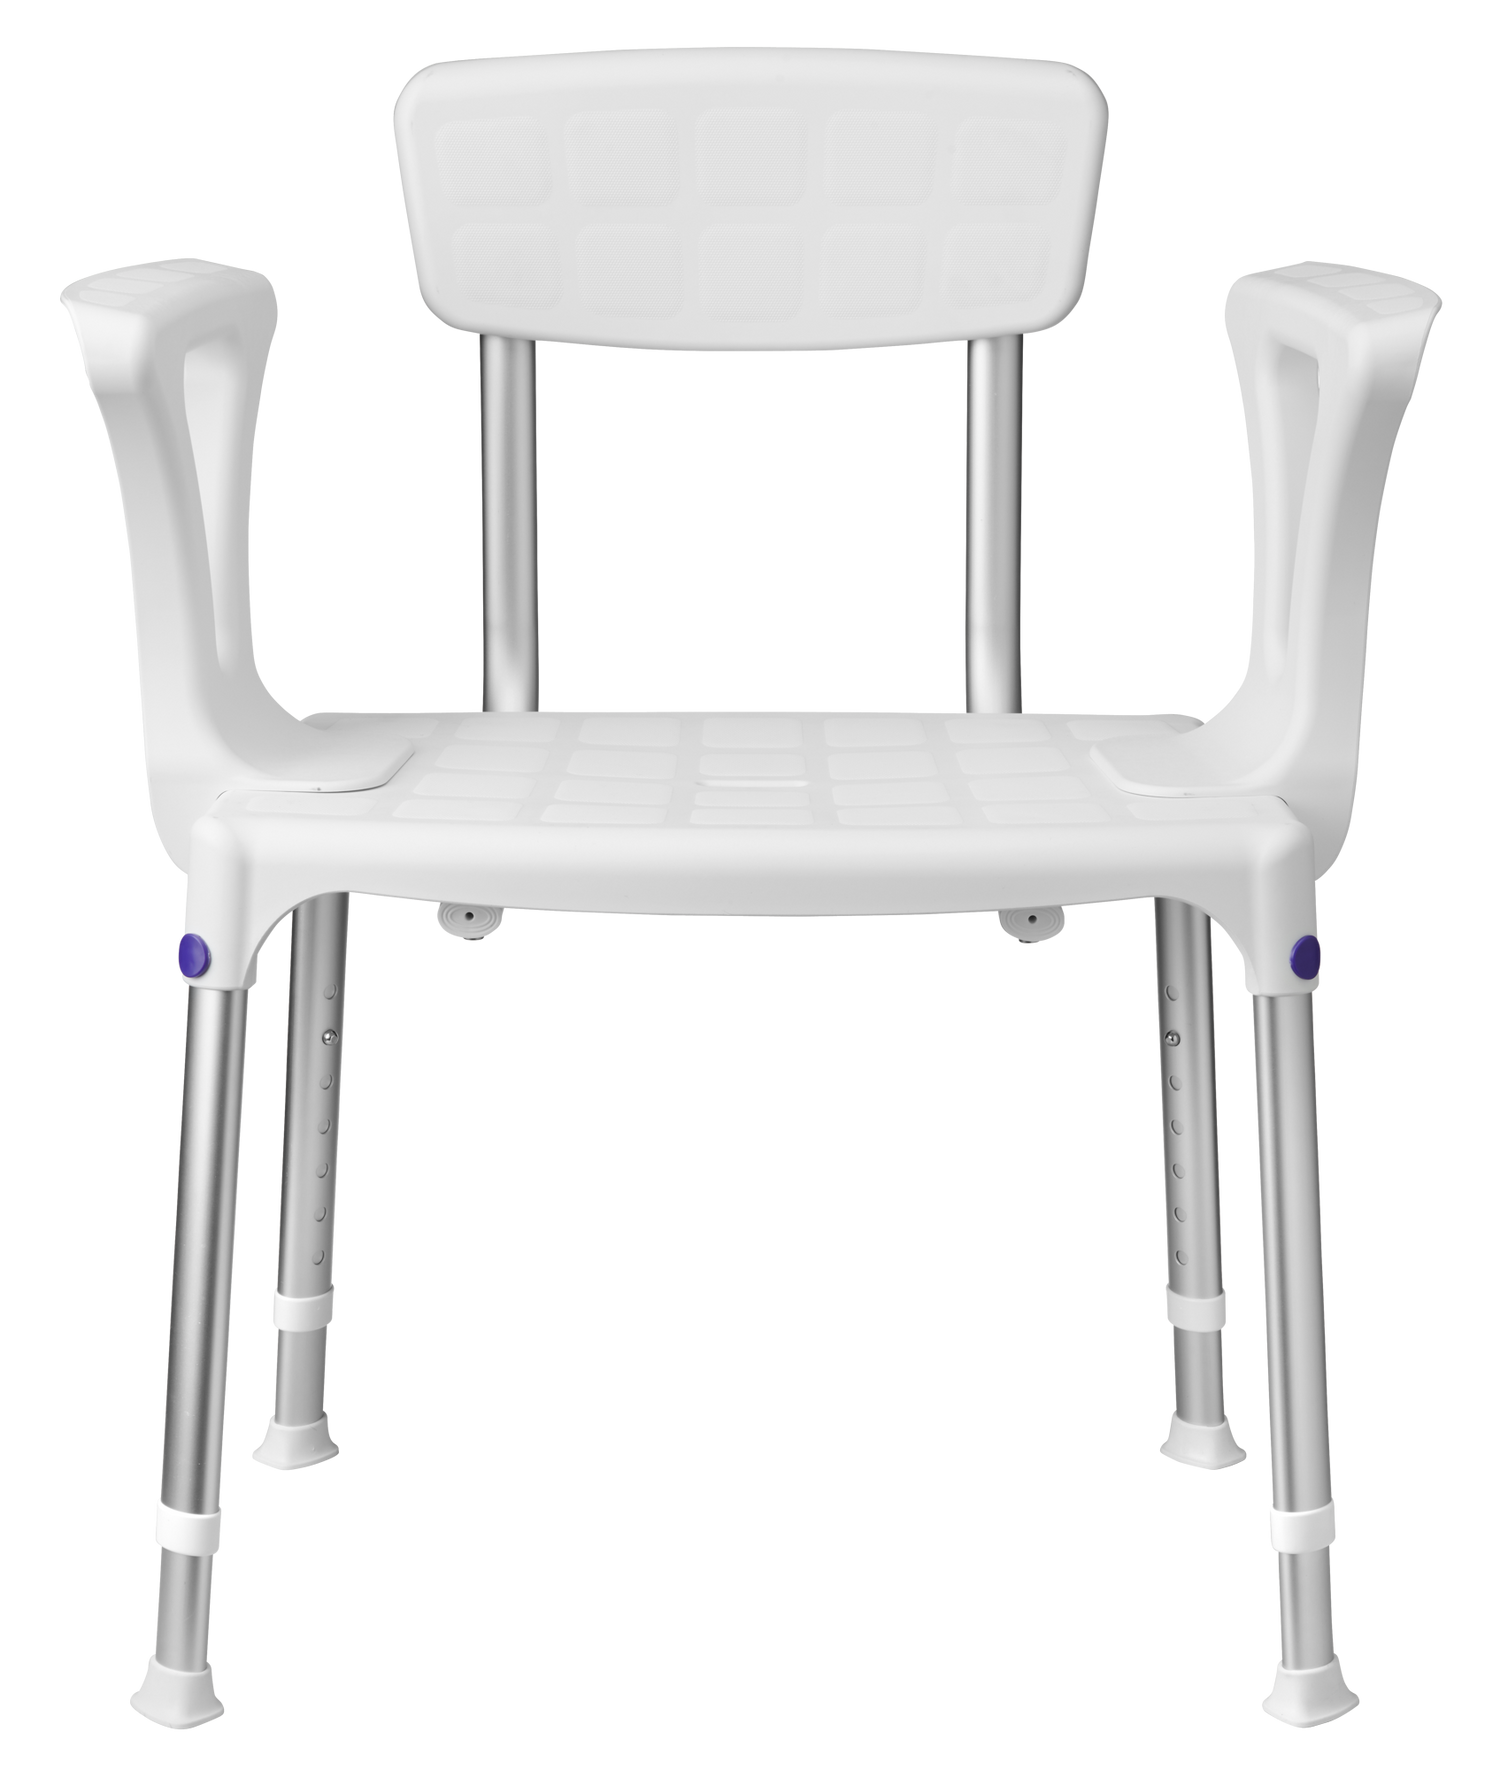 SecuCare Quattro armrest for shower chair